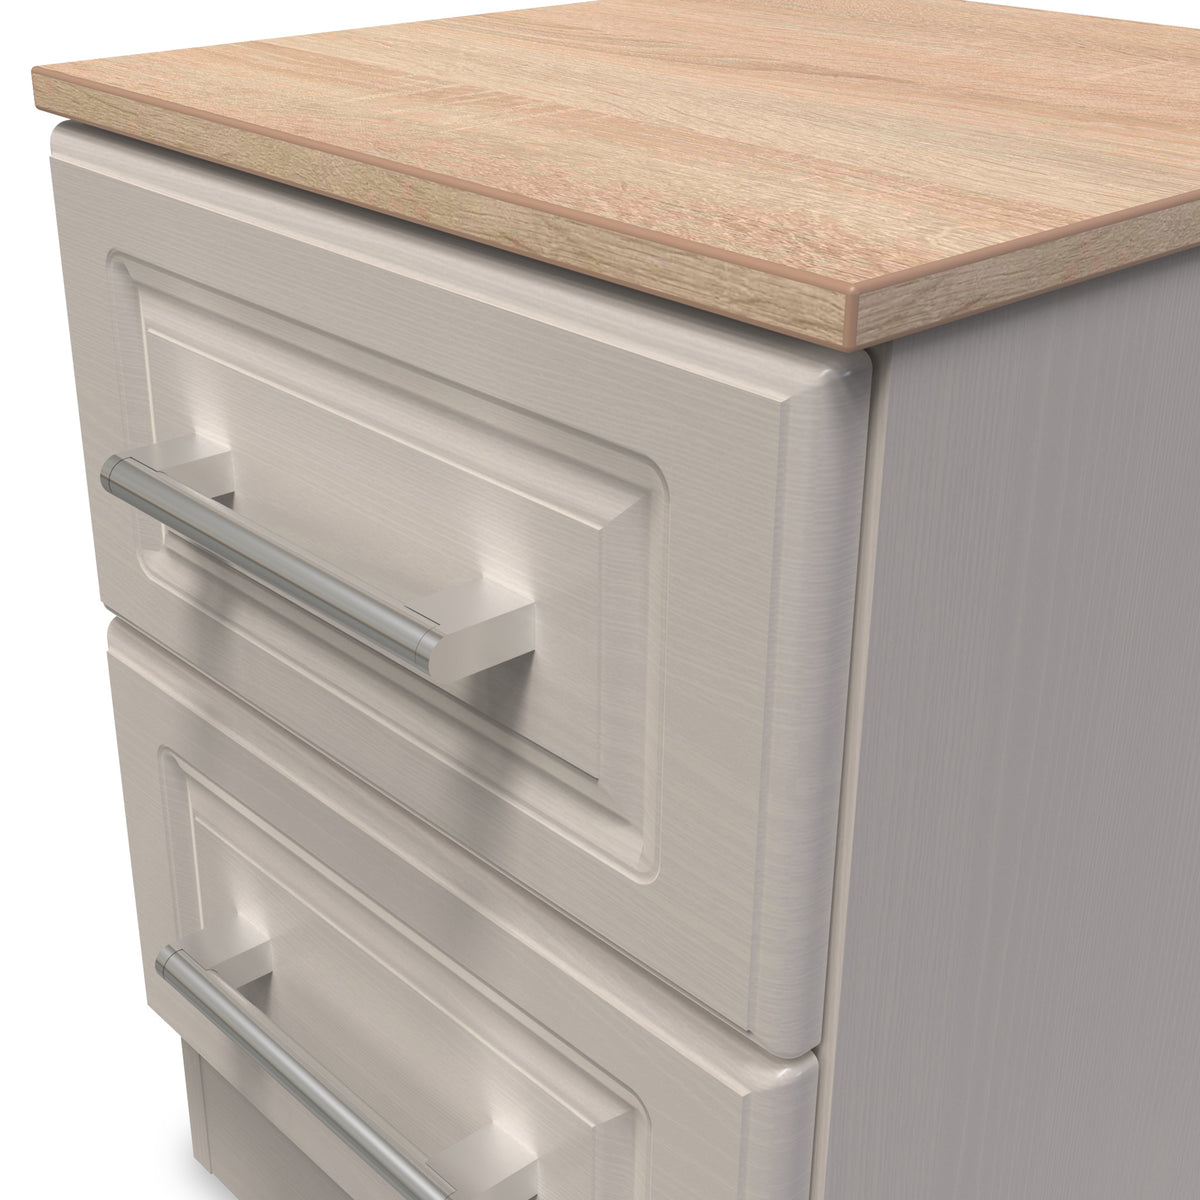 Talland Ash 2 Drawer Bedside Cabinet by Roseland Furniture